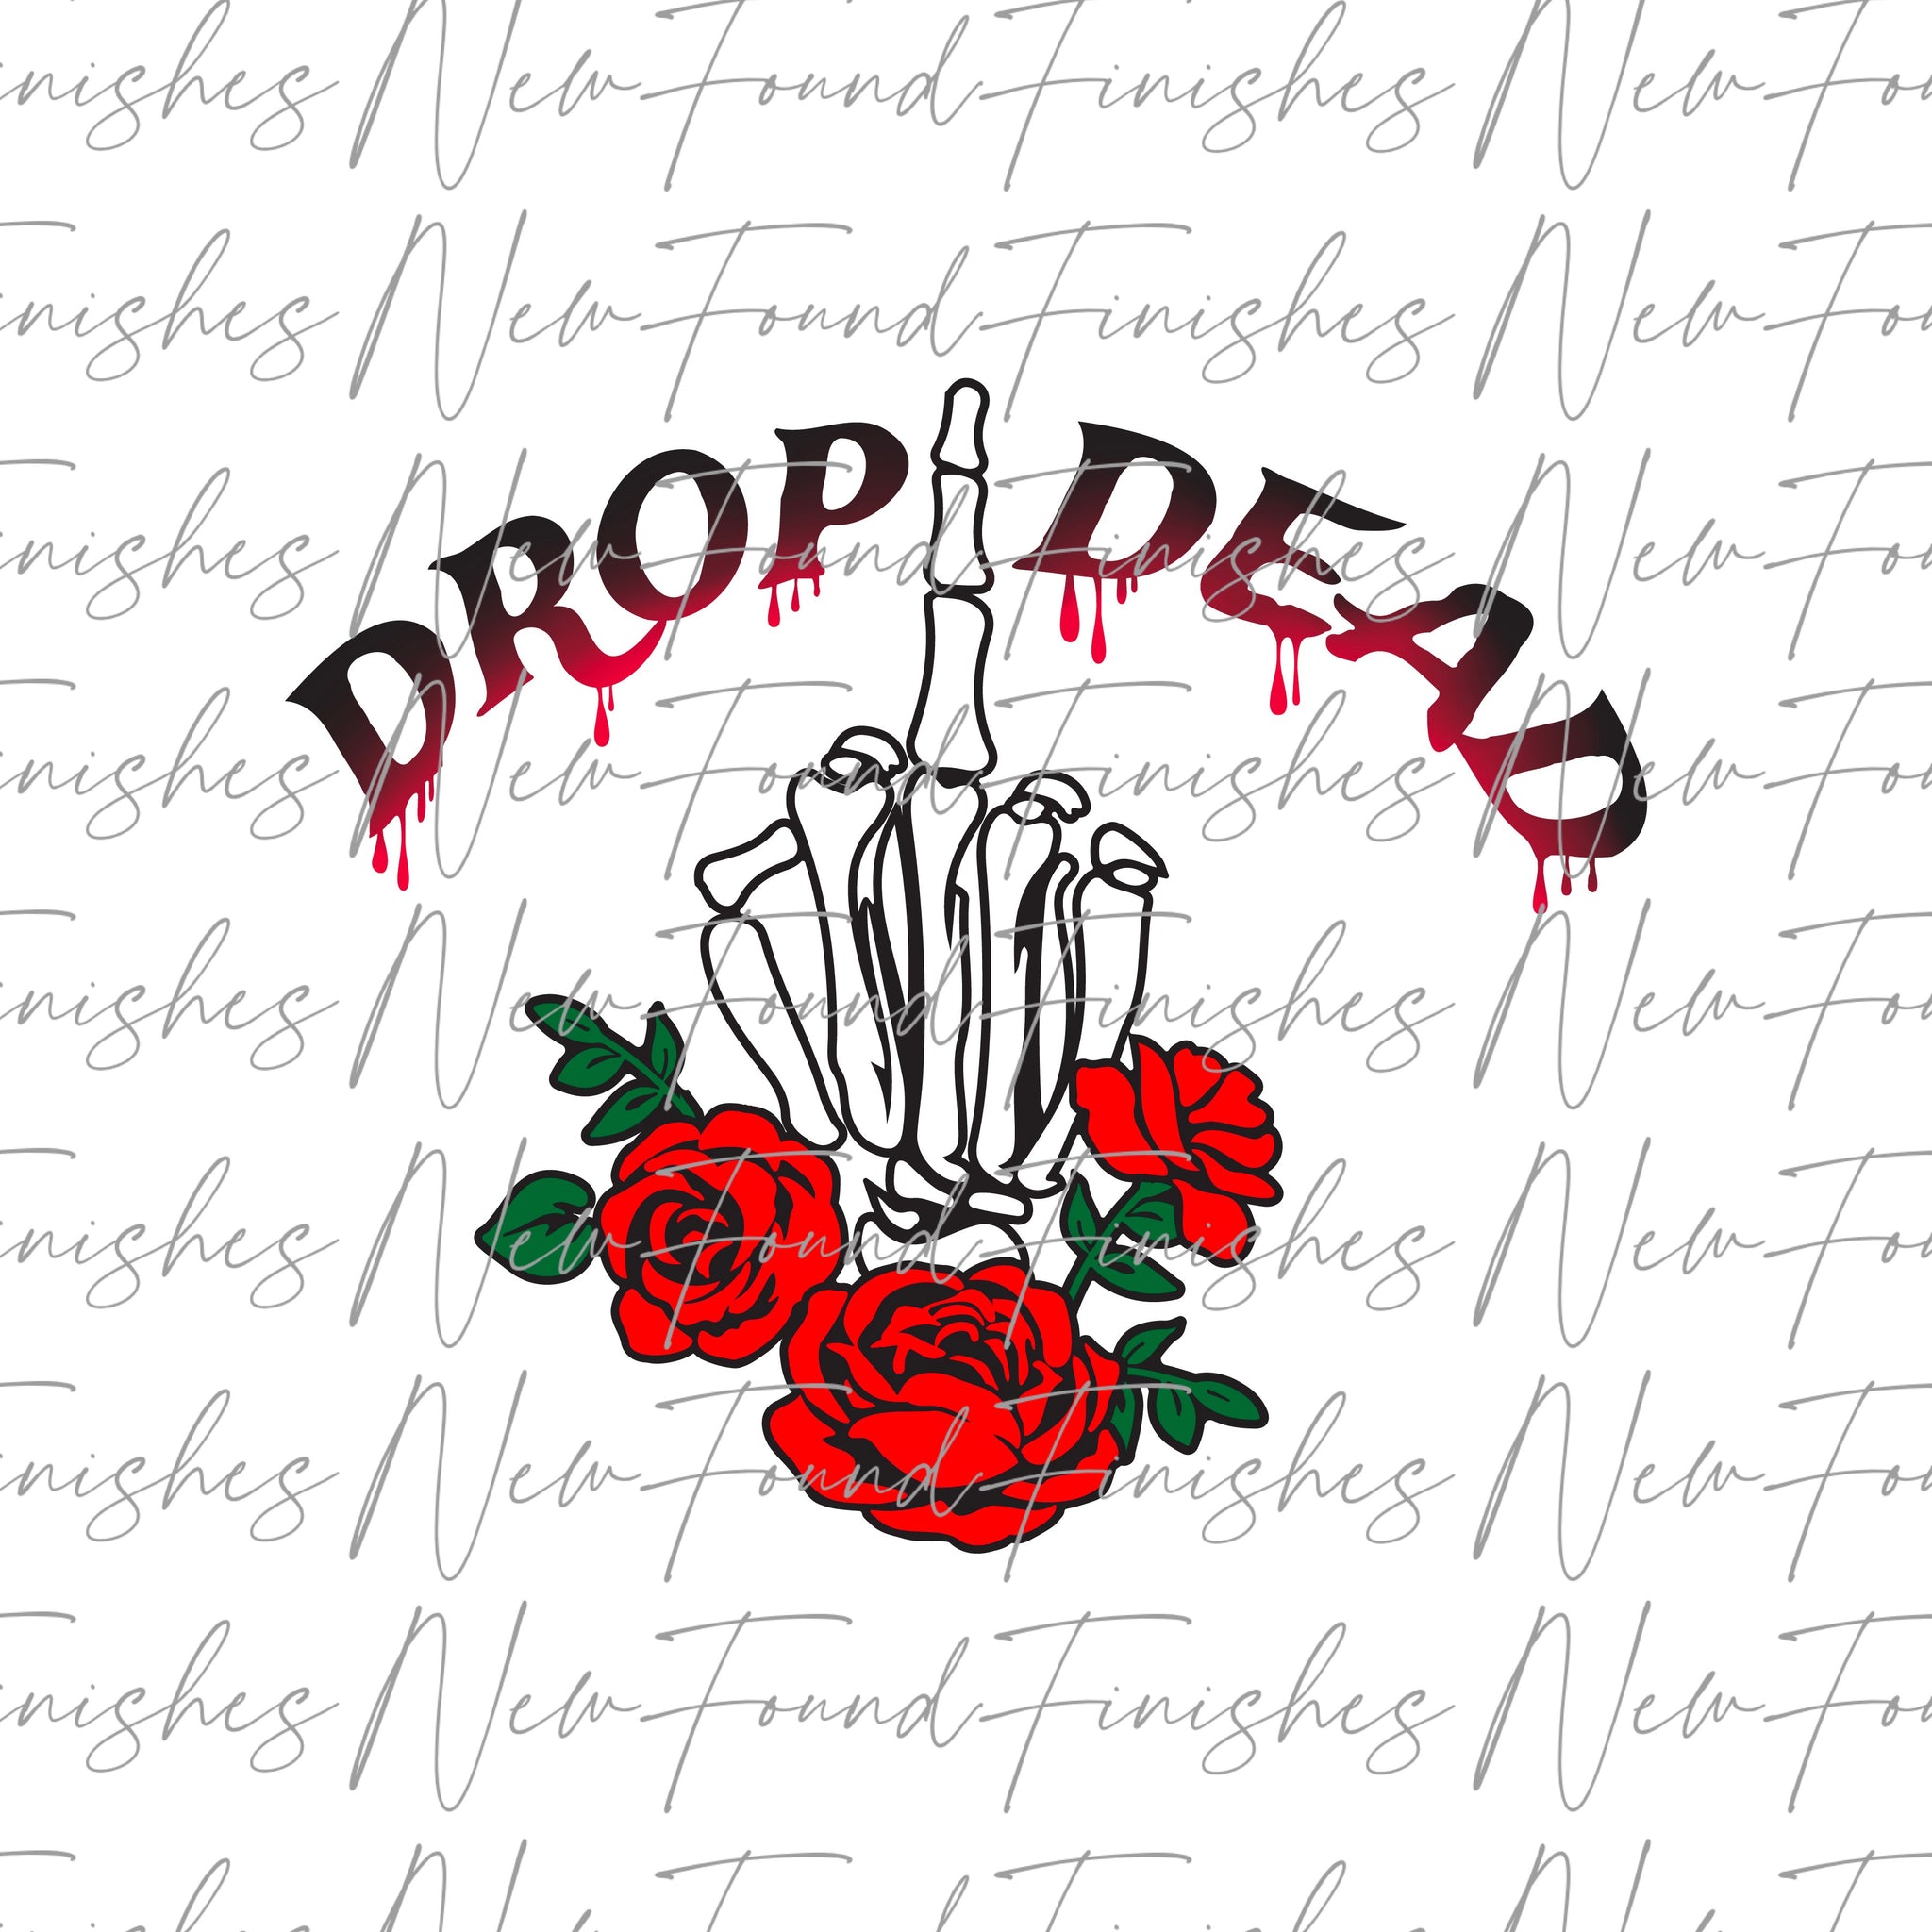 Drop dead